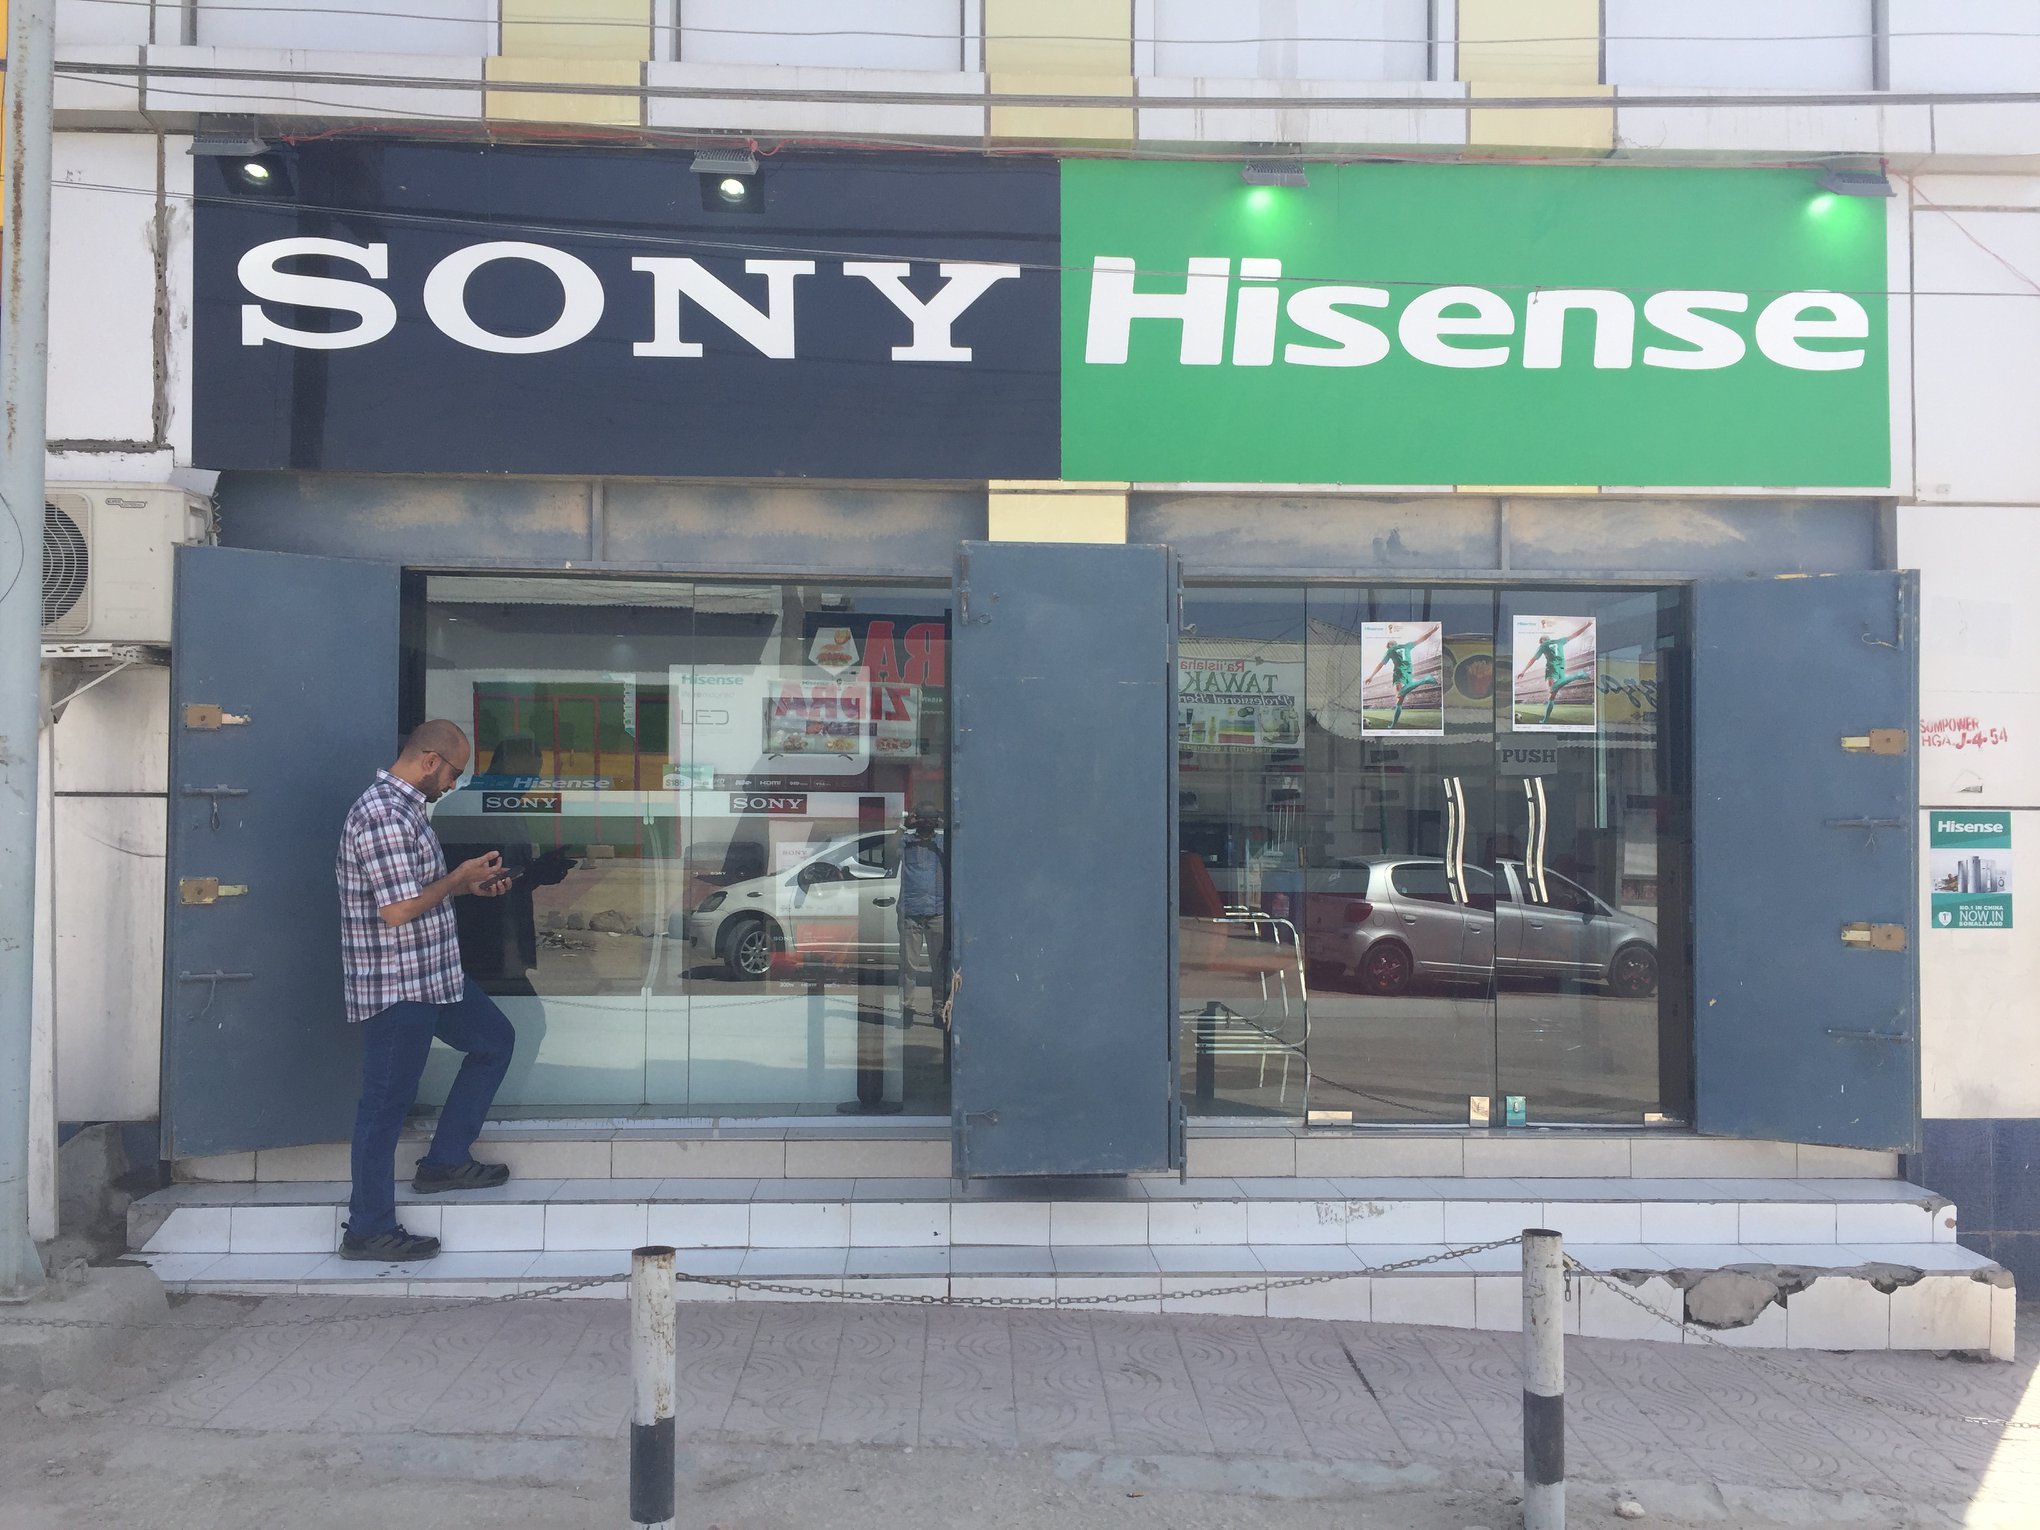 Sony & Hisense